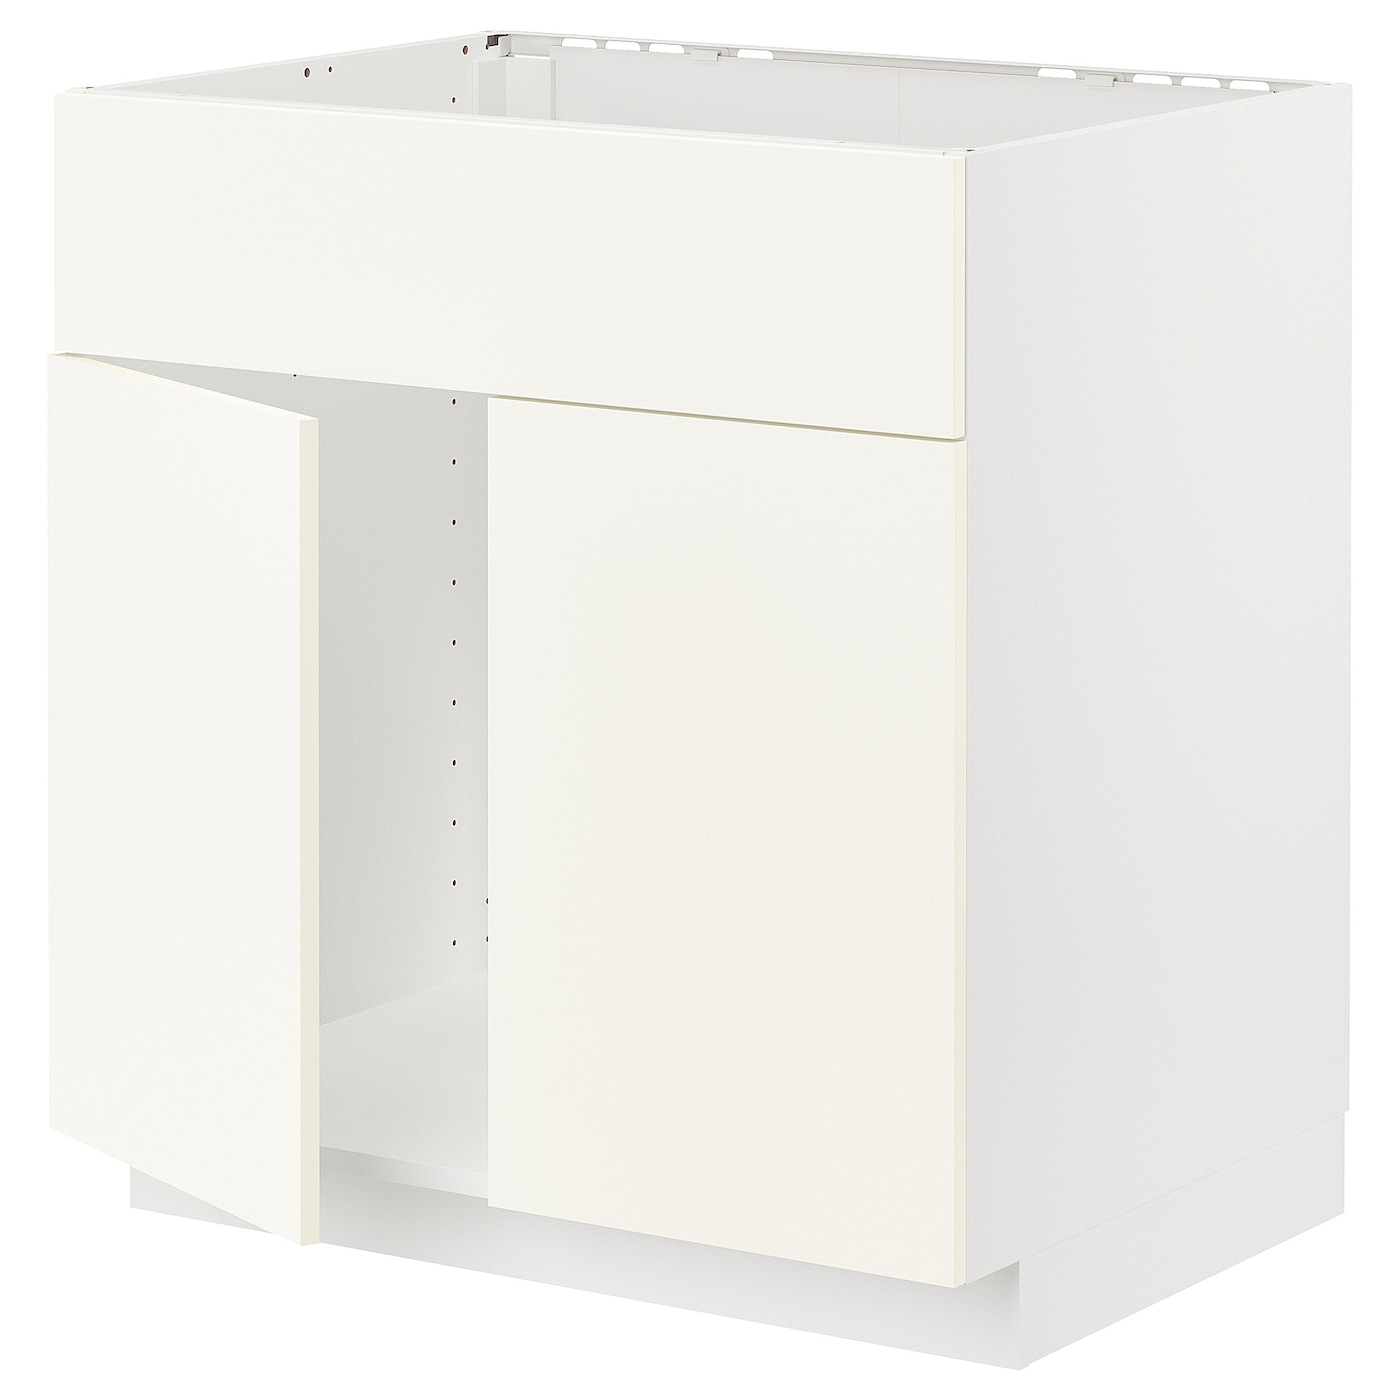 Напольный шкаф - METOD IKEA/ МЕТОД ИКЕА,  88х80 см, белый